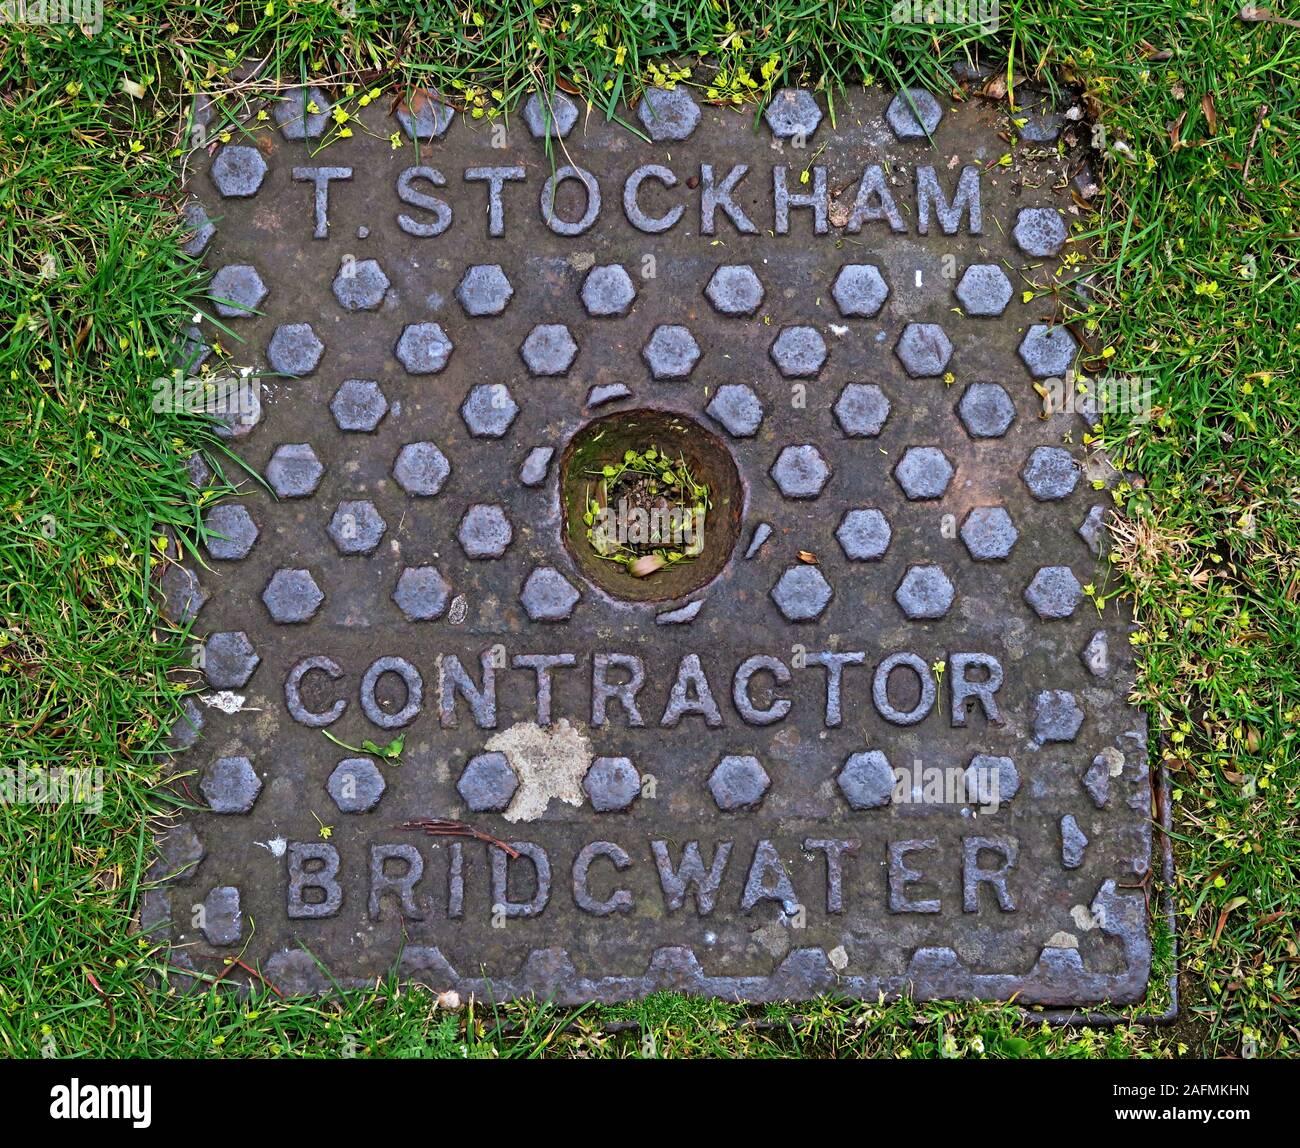 Bridgwater goffrato ghisa Grid, Bridgwater Town, Somerset, Inghilterra sudoccidentale, Regno Unito - T.Stockham Contractor Bridgwater Foto Stock